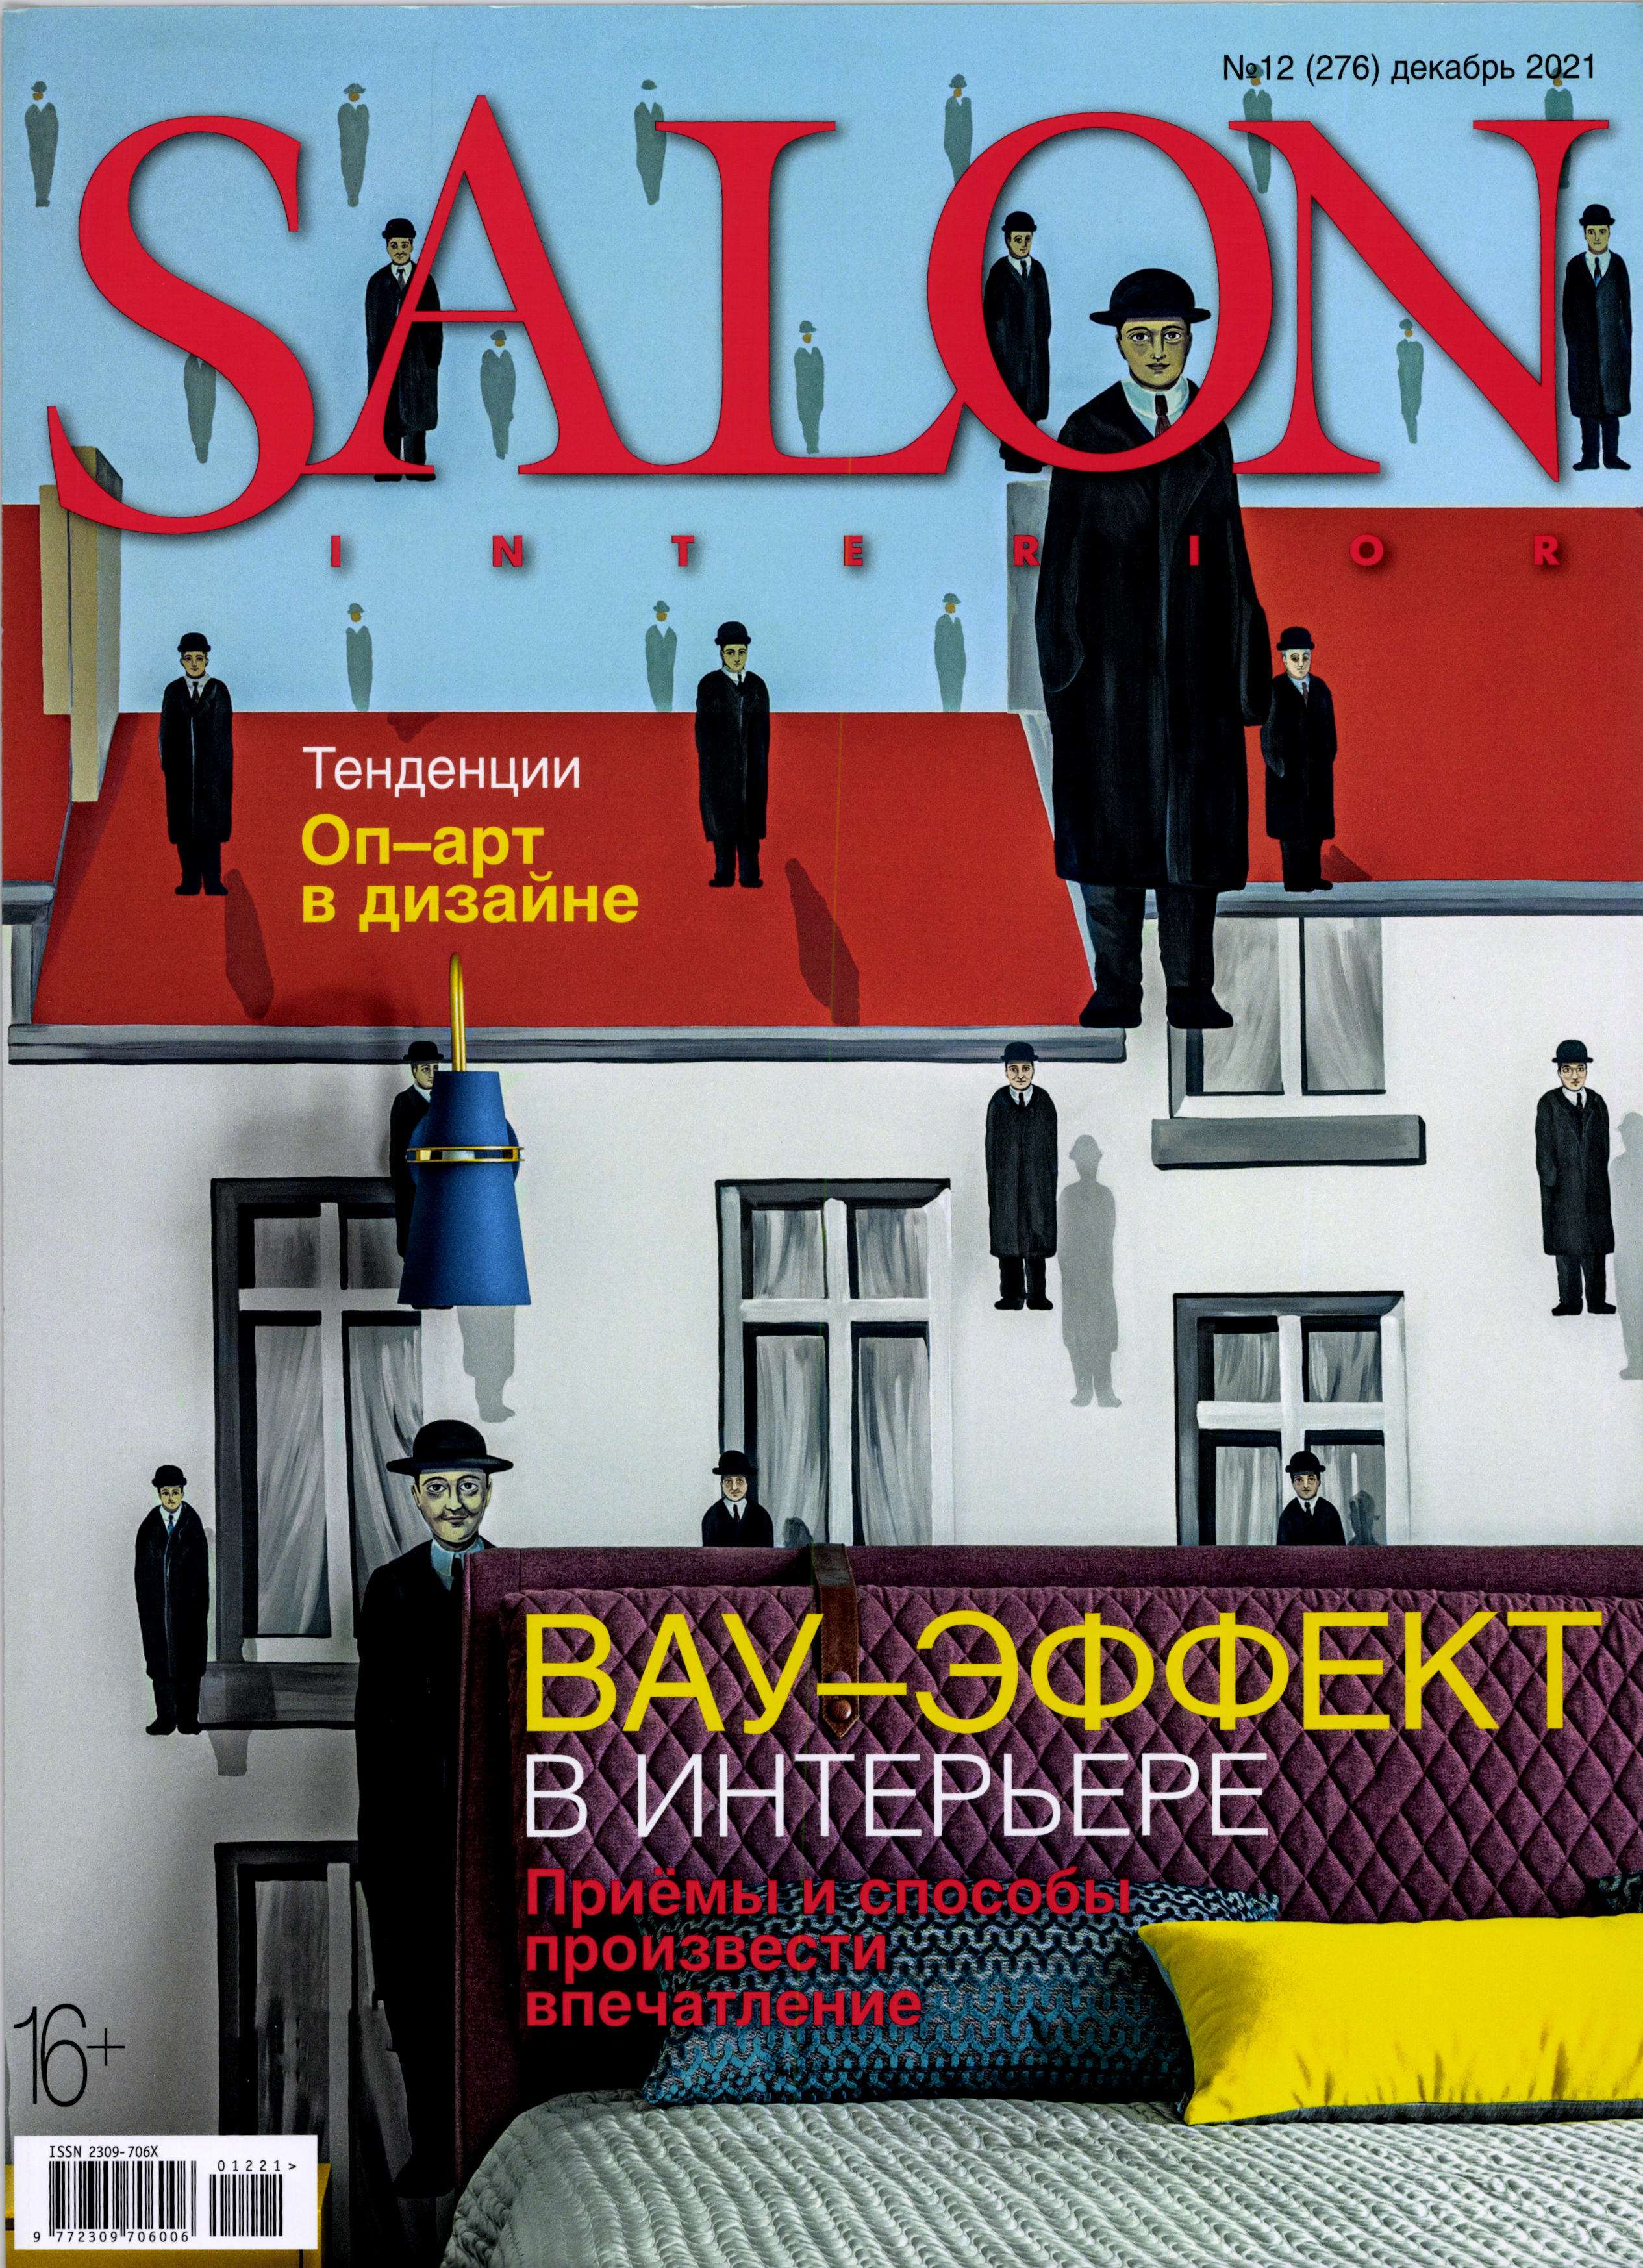 Salon Russia January 2022